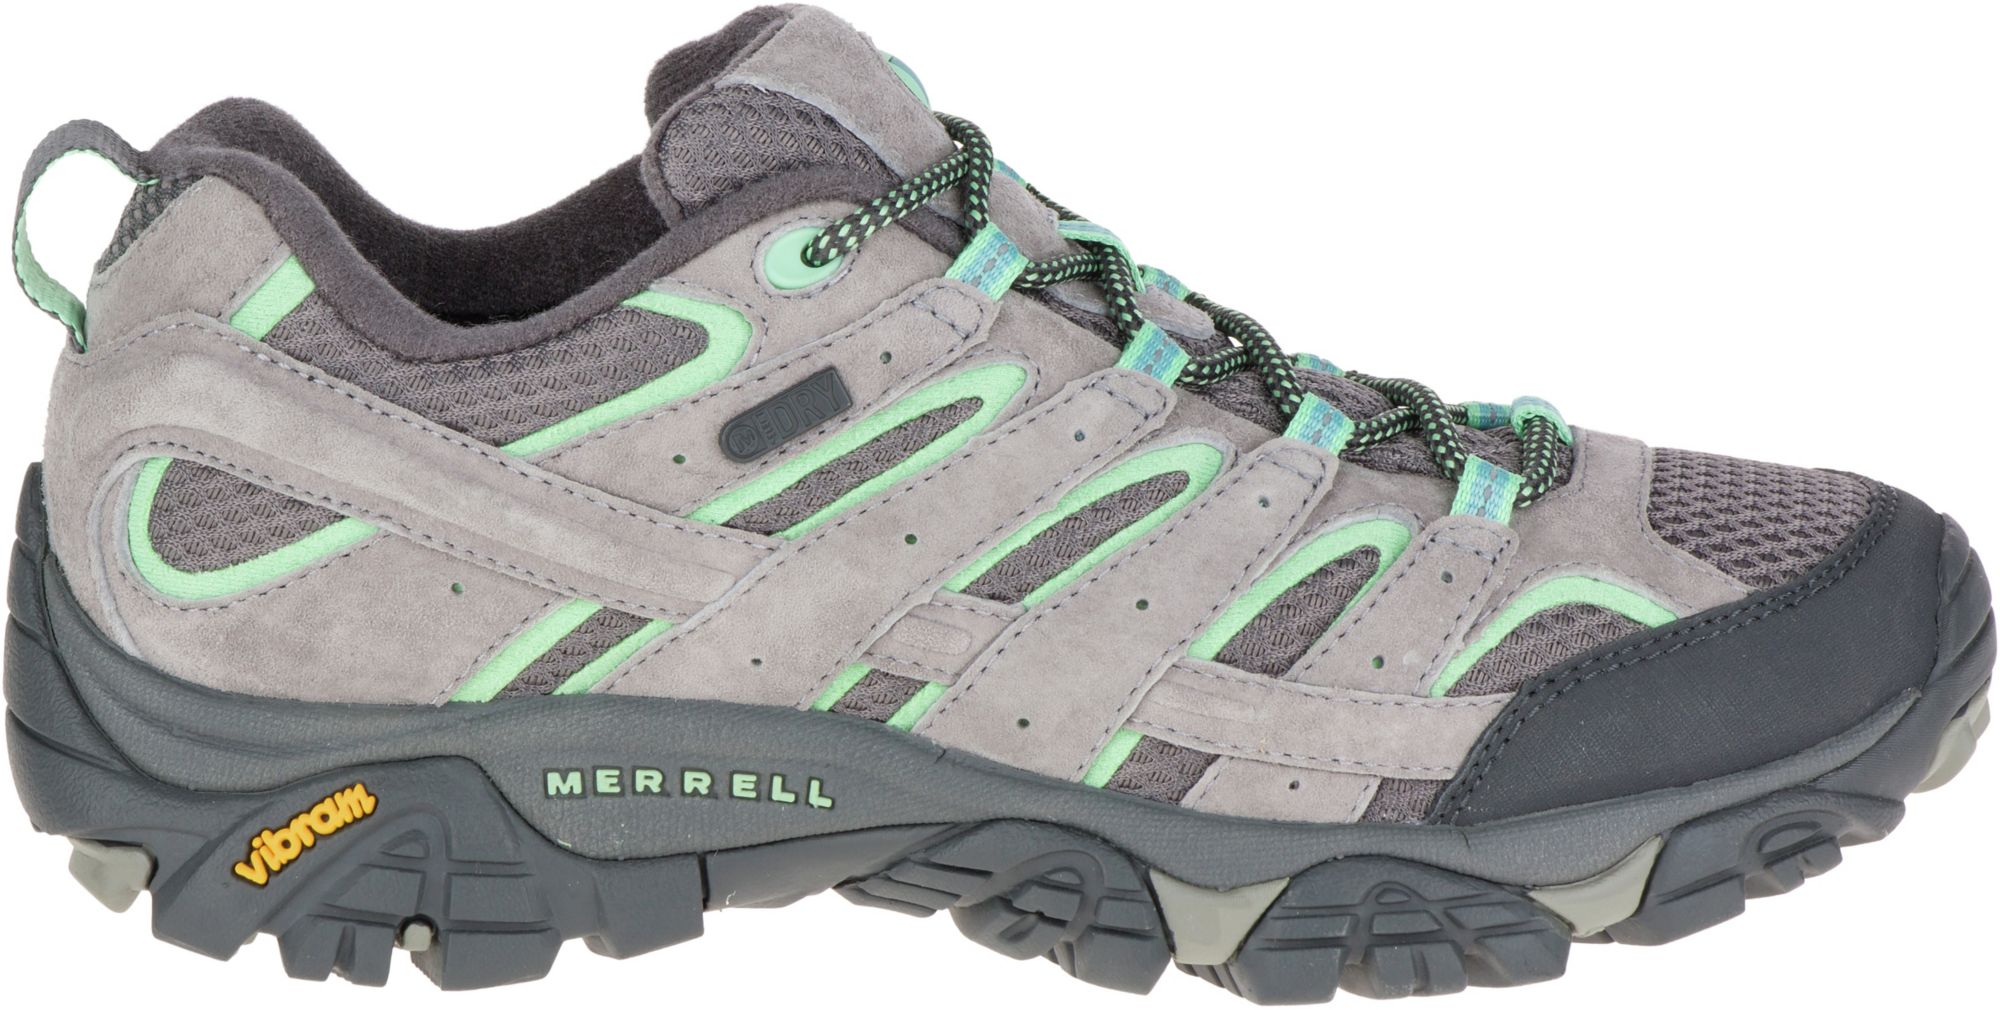 merrell trail shoes womens